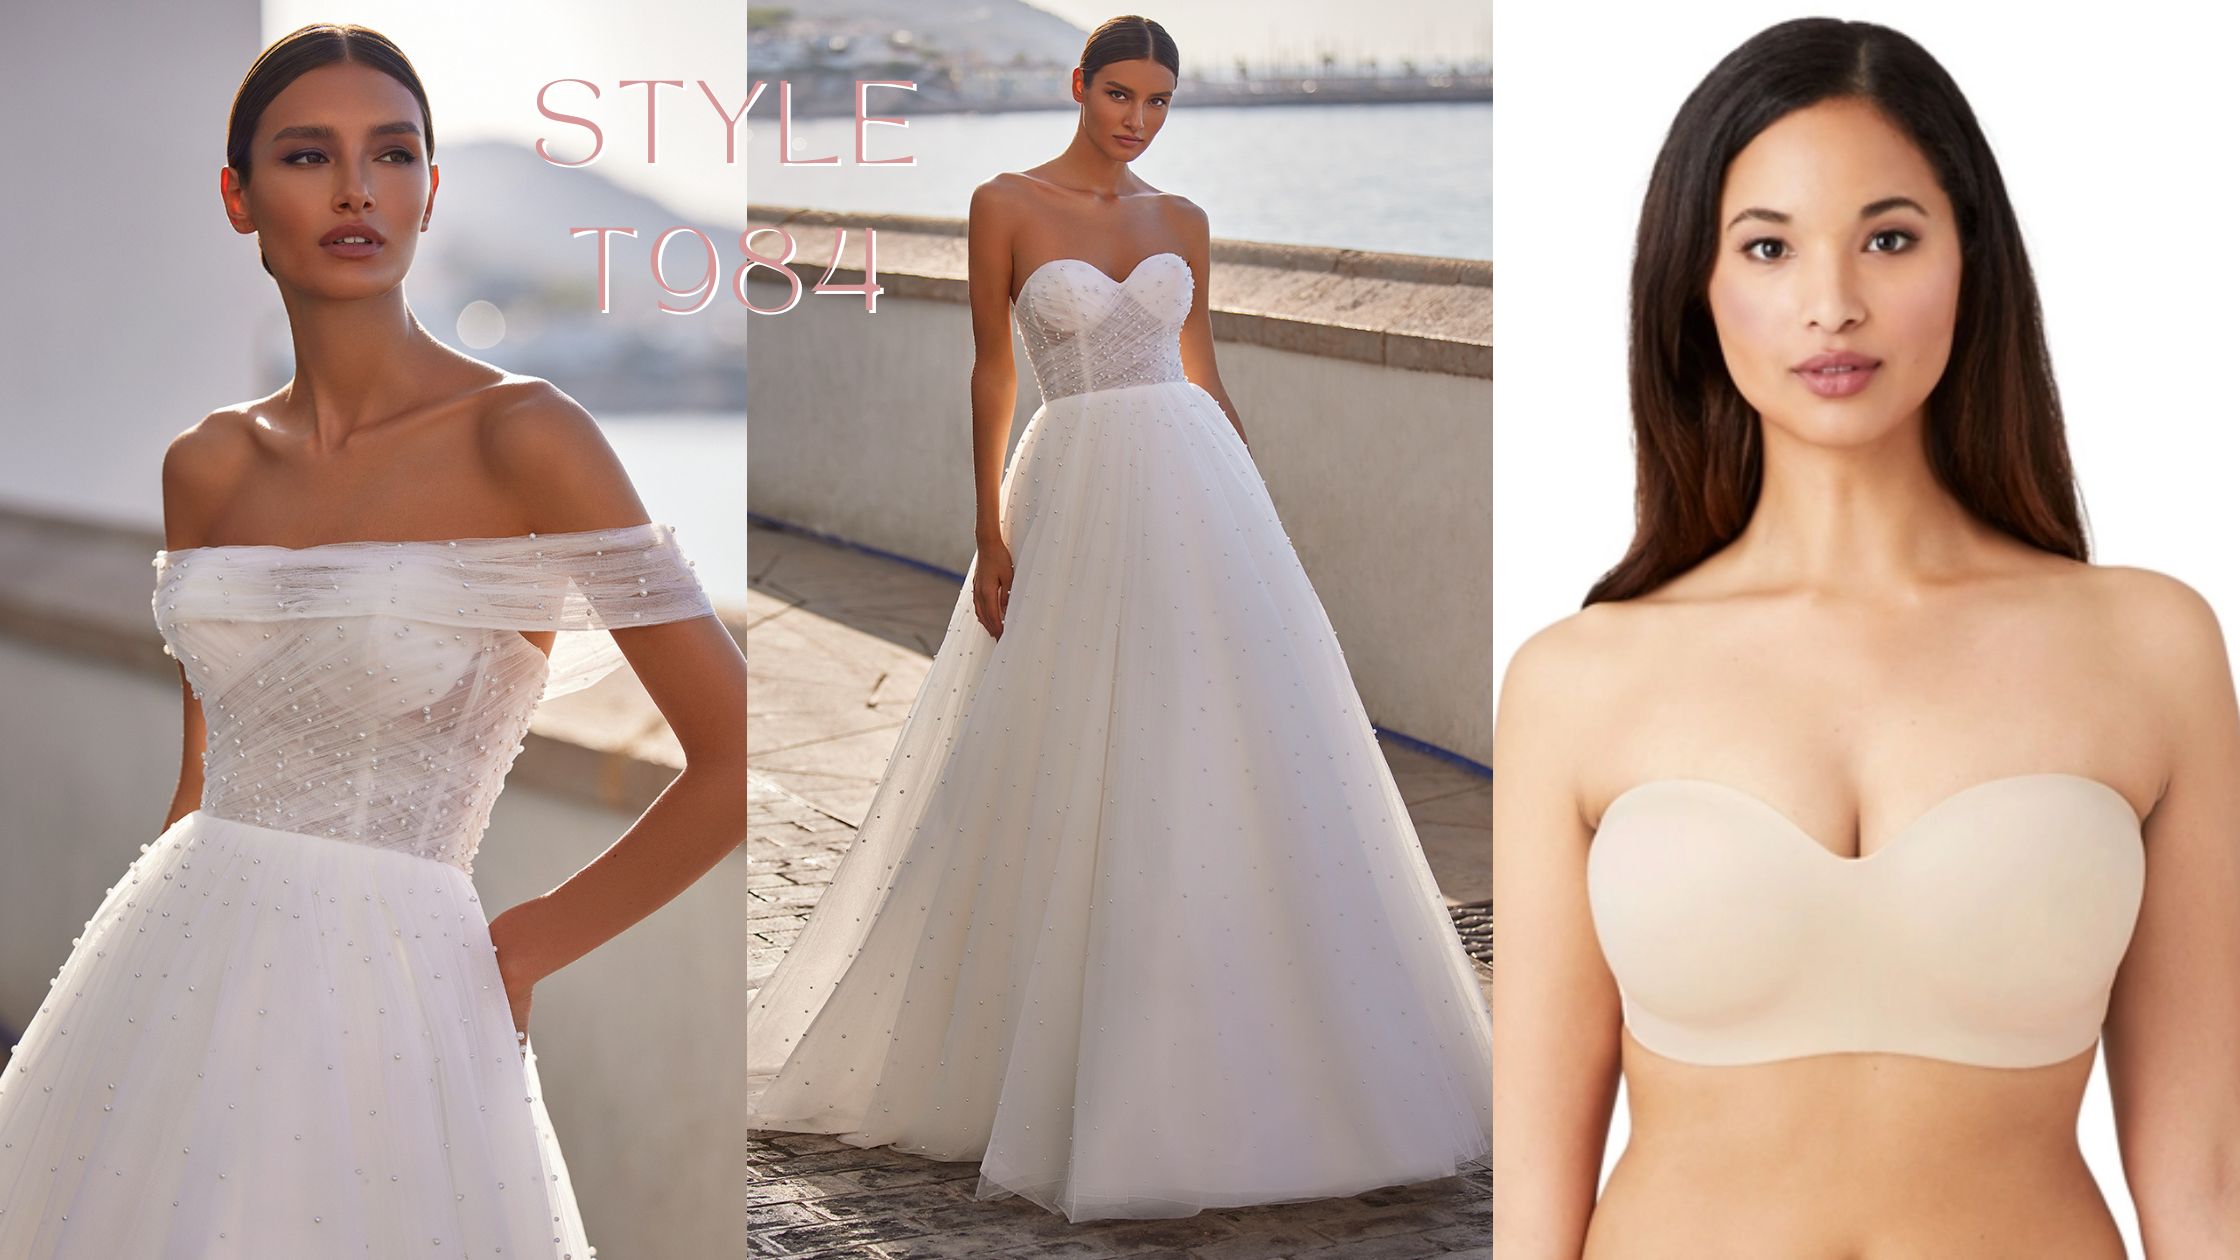 What to Wear Under Your Wedding Dress - Fashionista